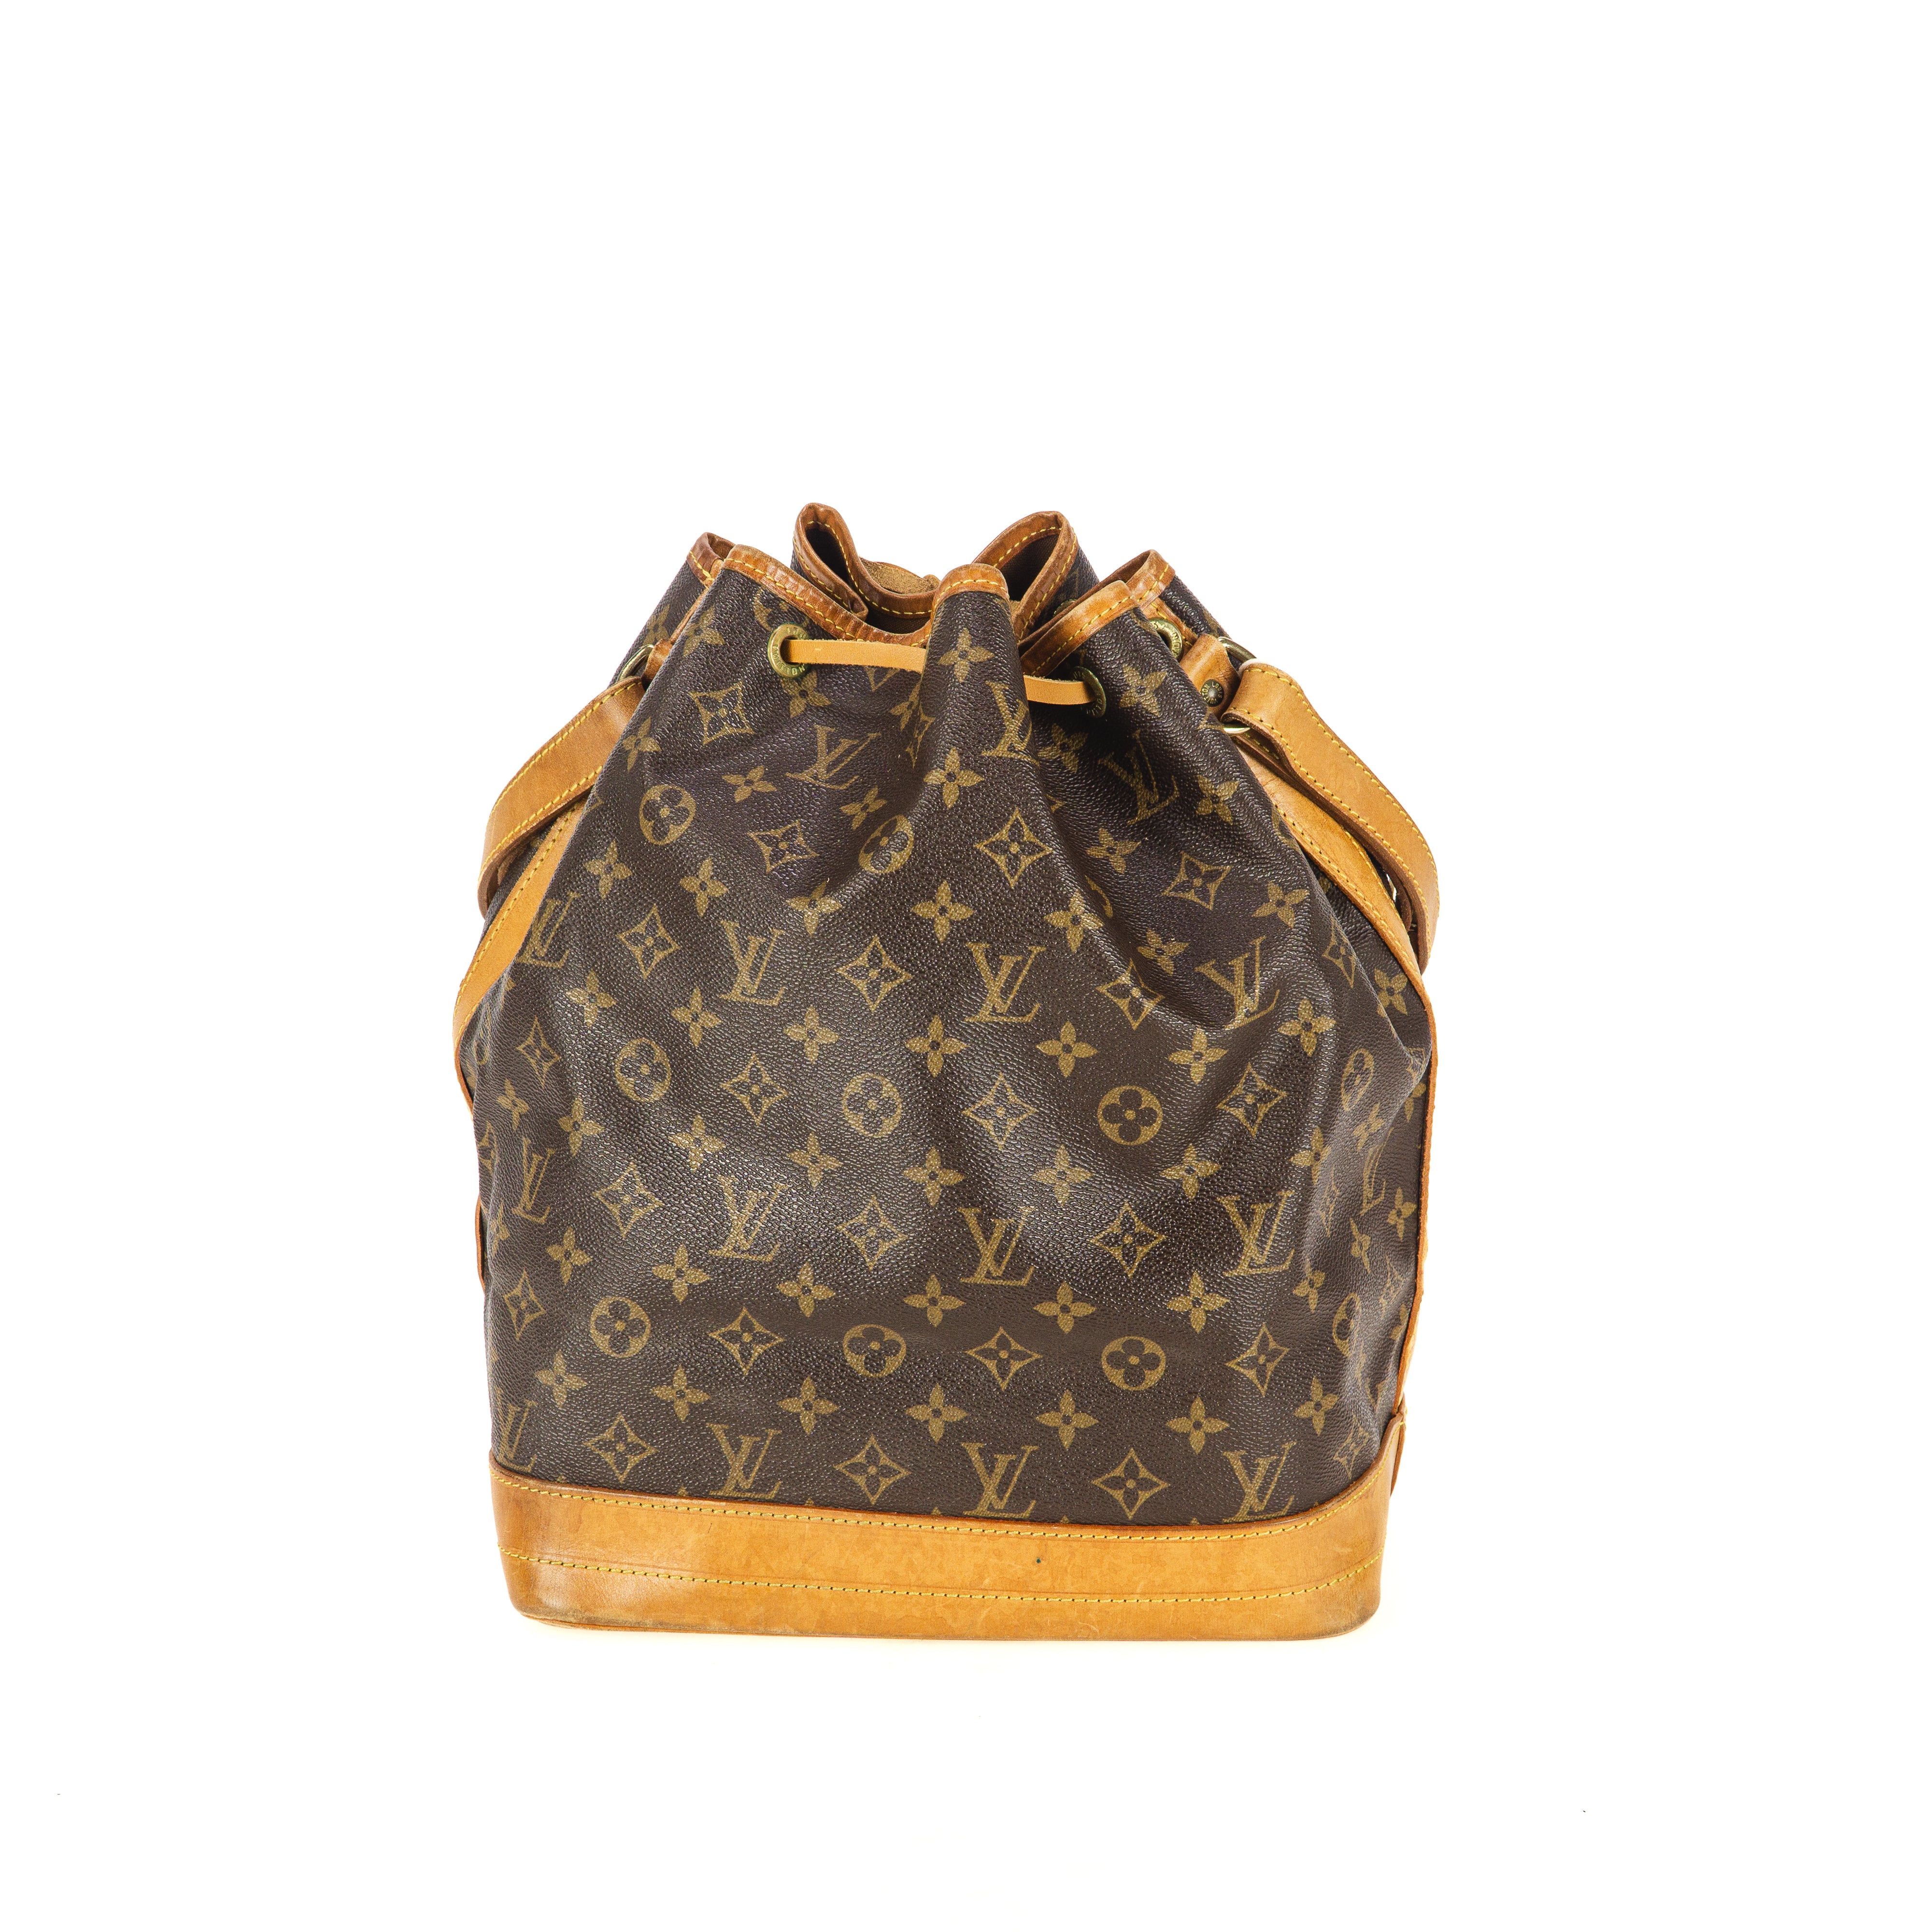 Louis Vuitton Tasche 3000 Euro